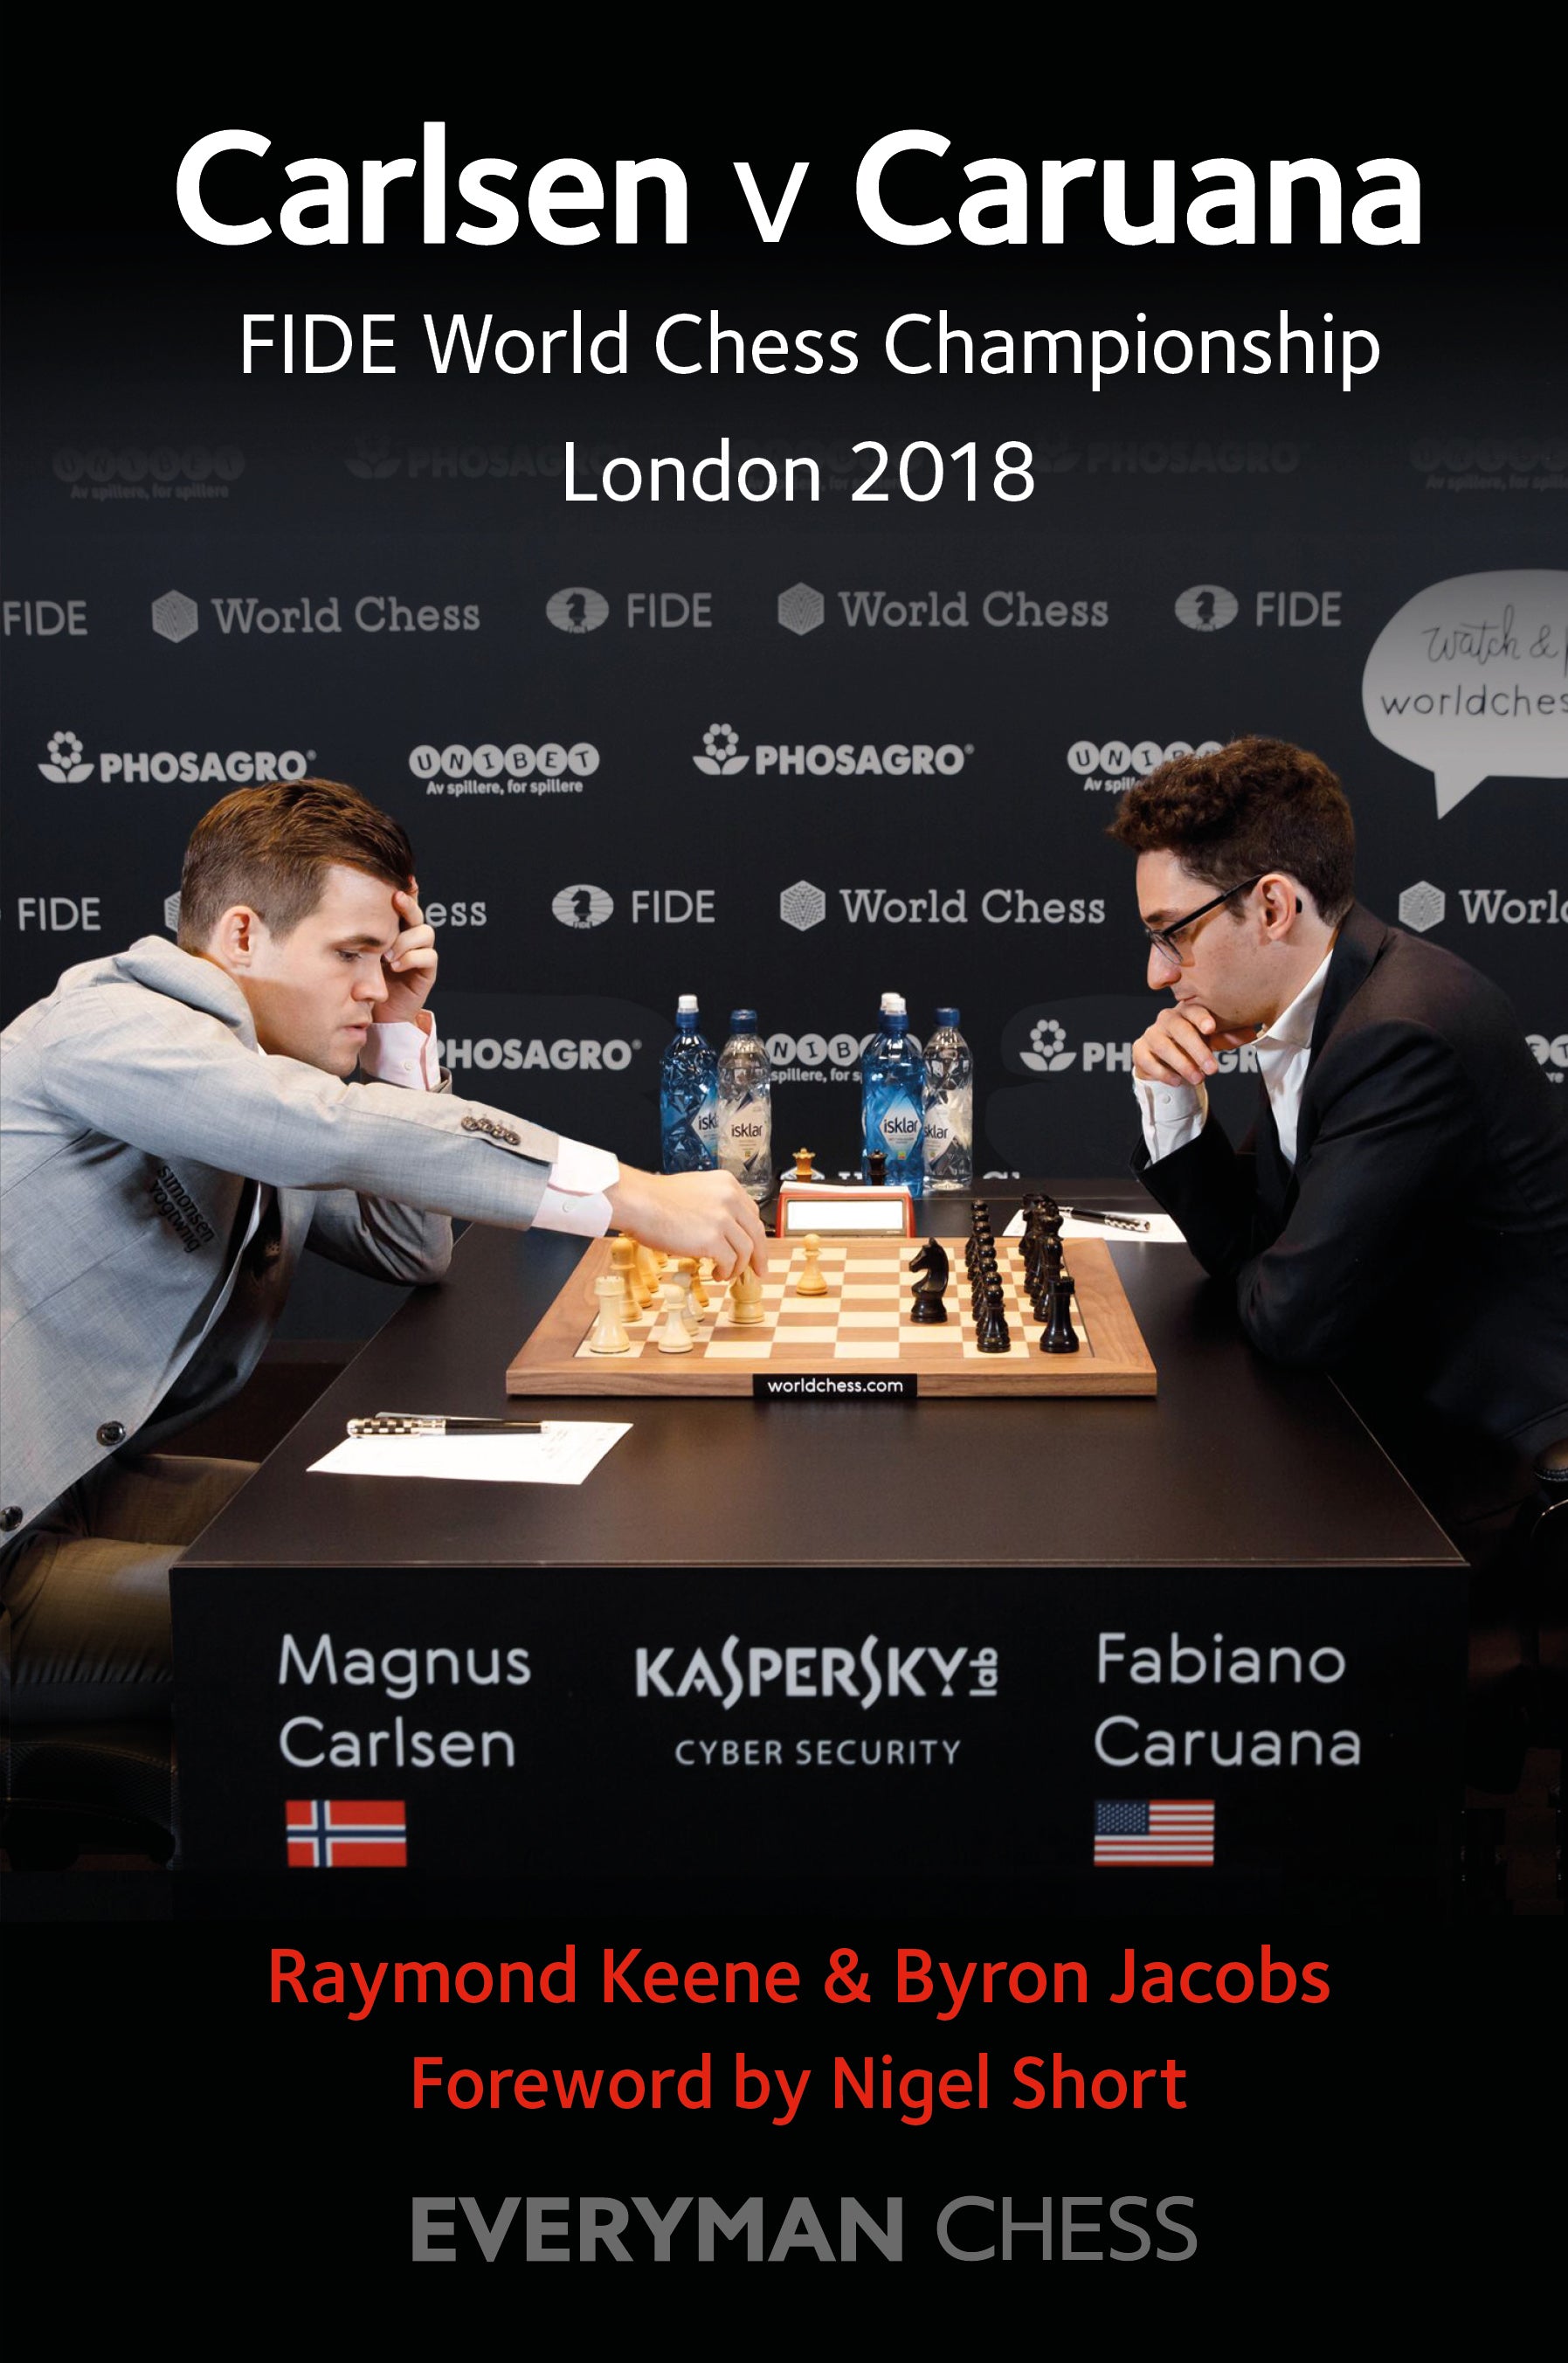 Three world champions? Four world champions! (Karpov, Carlsen